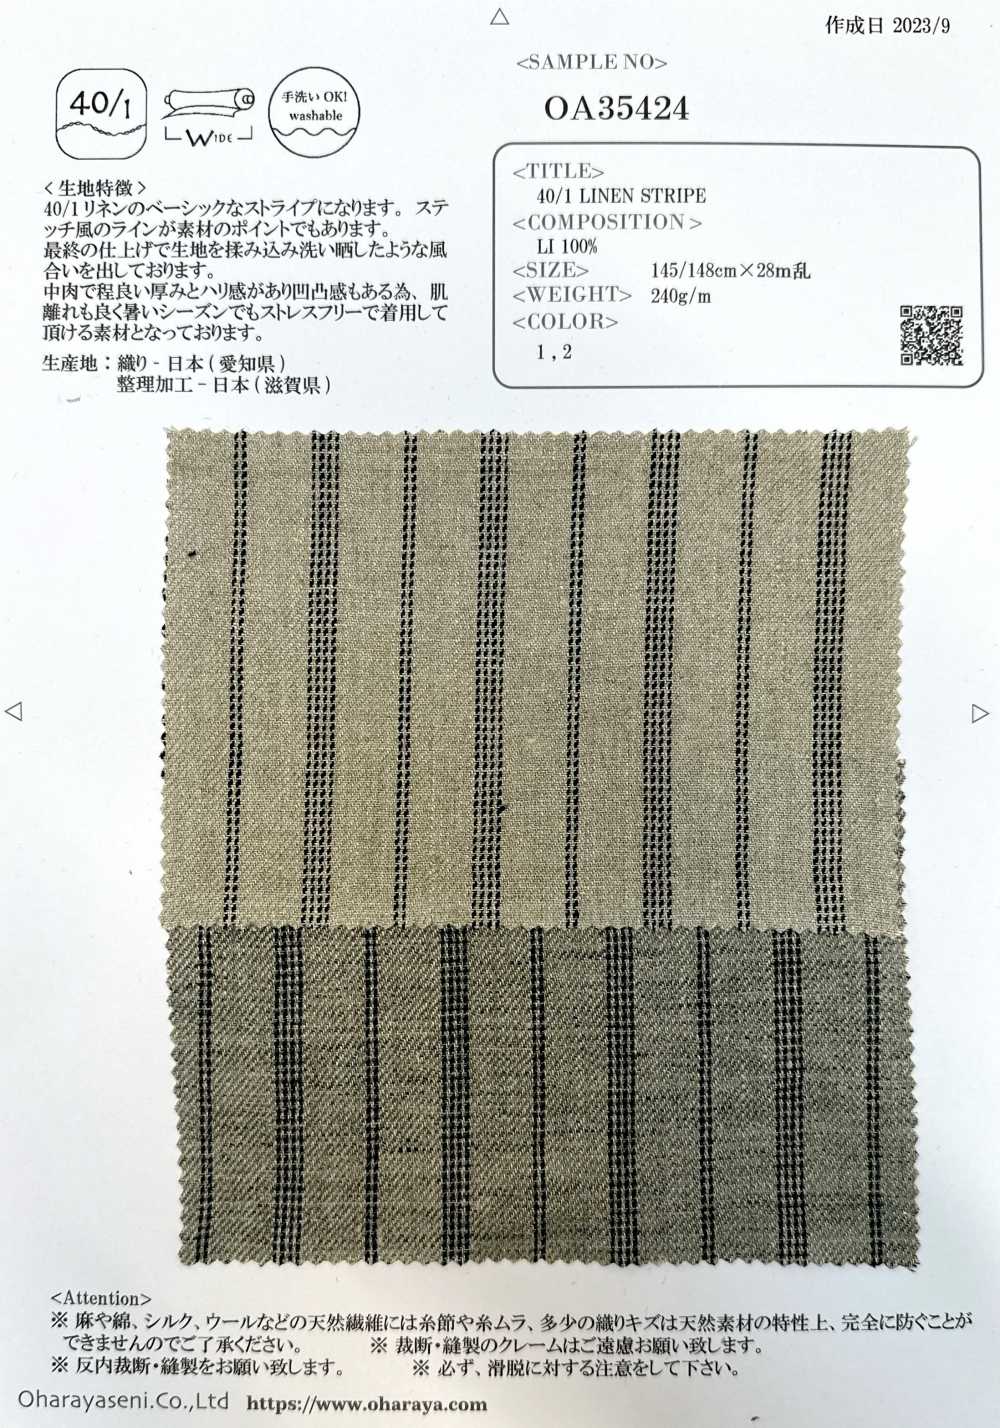 OA35424 40/1 LEINEN STREIFEN[Textilgewebe] Oharayaseni